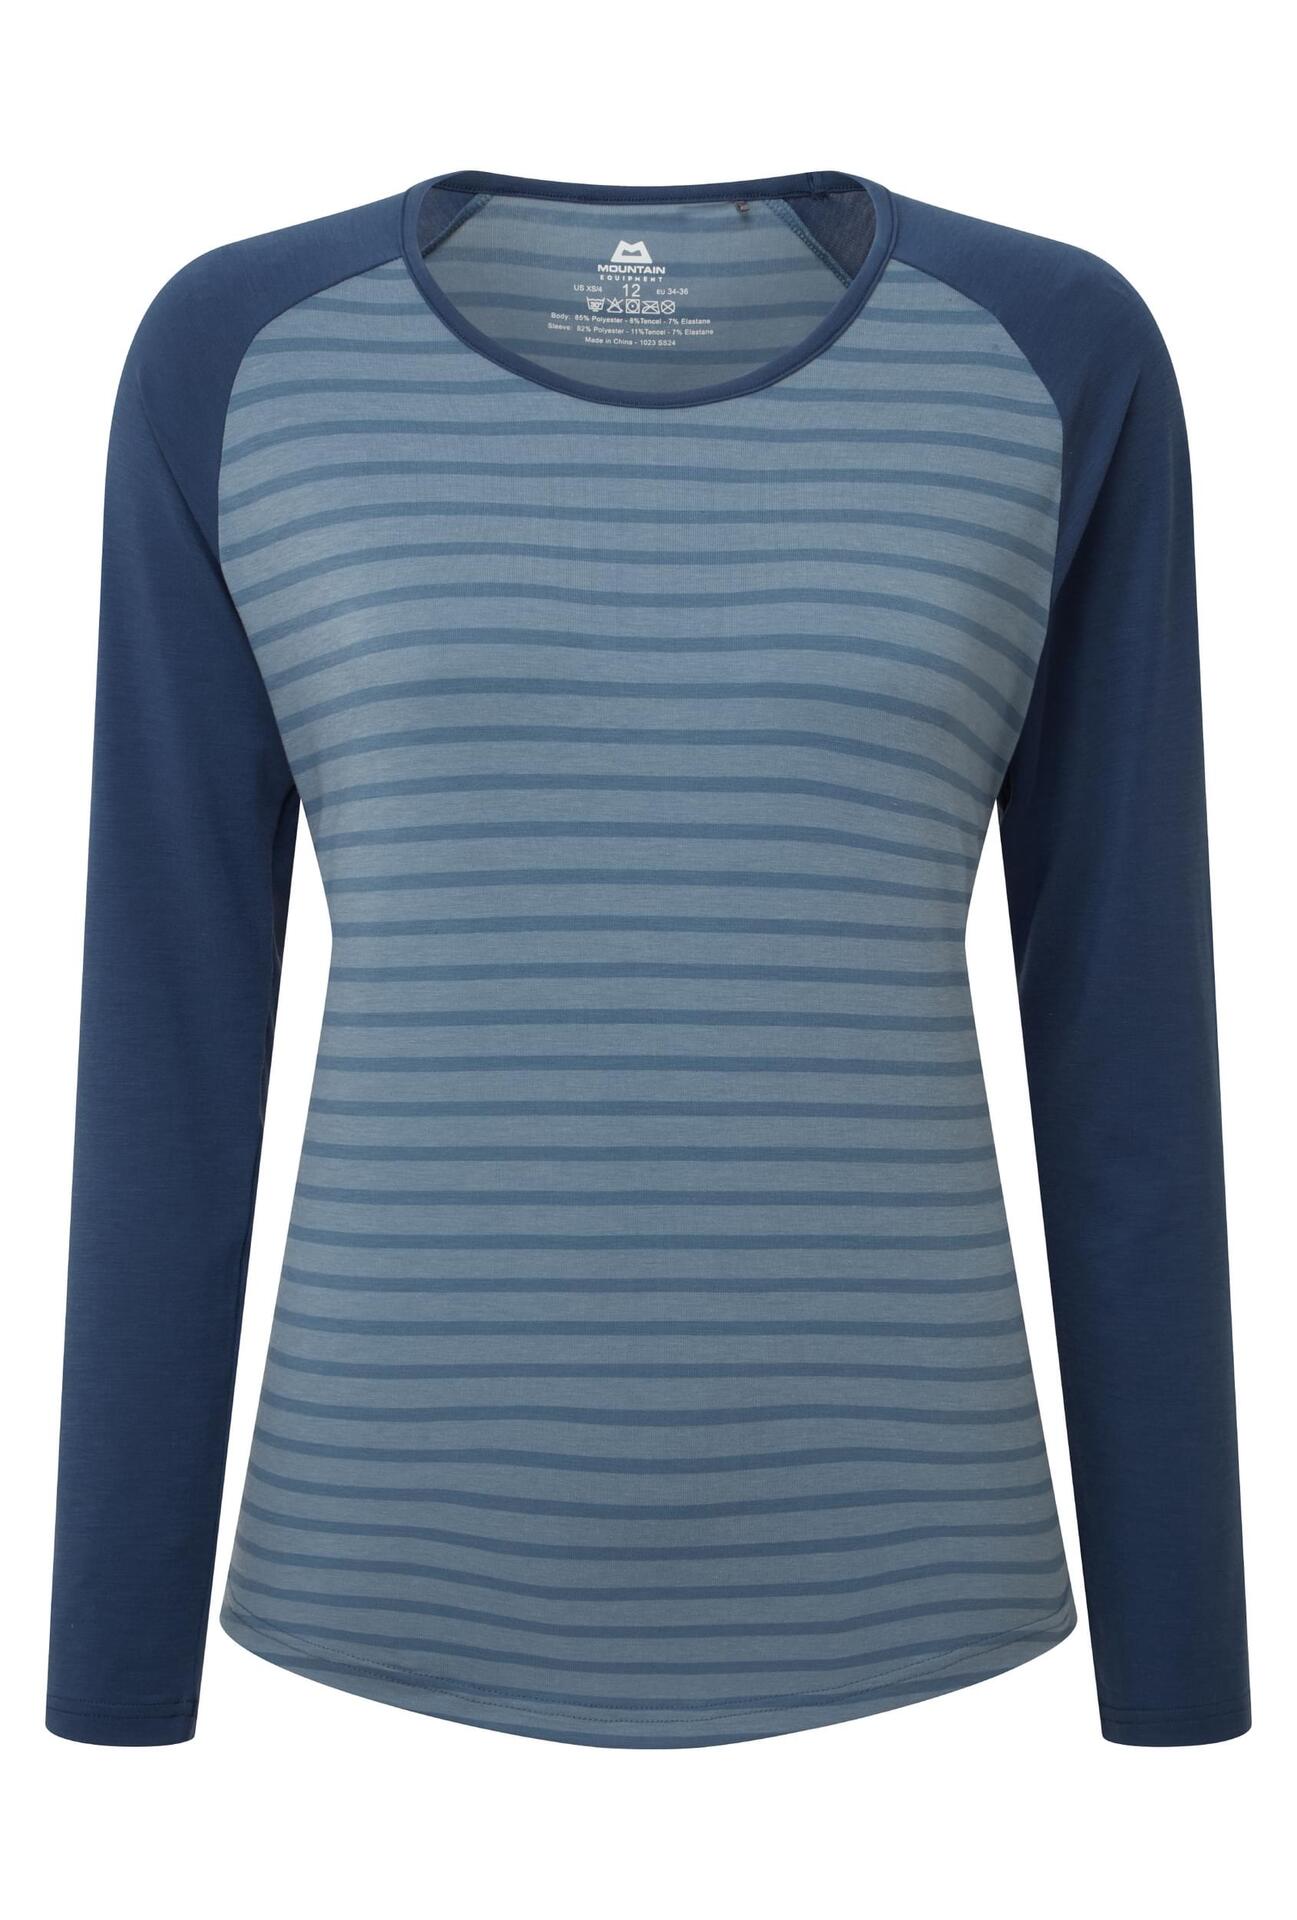 Mountain Equipment Redline LS Tee Women'S Barva: Bluefin Stripe/Denim Blue, Velikost: XL